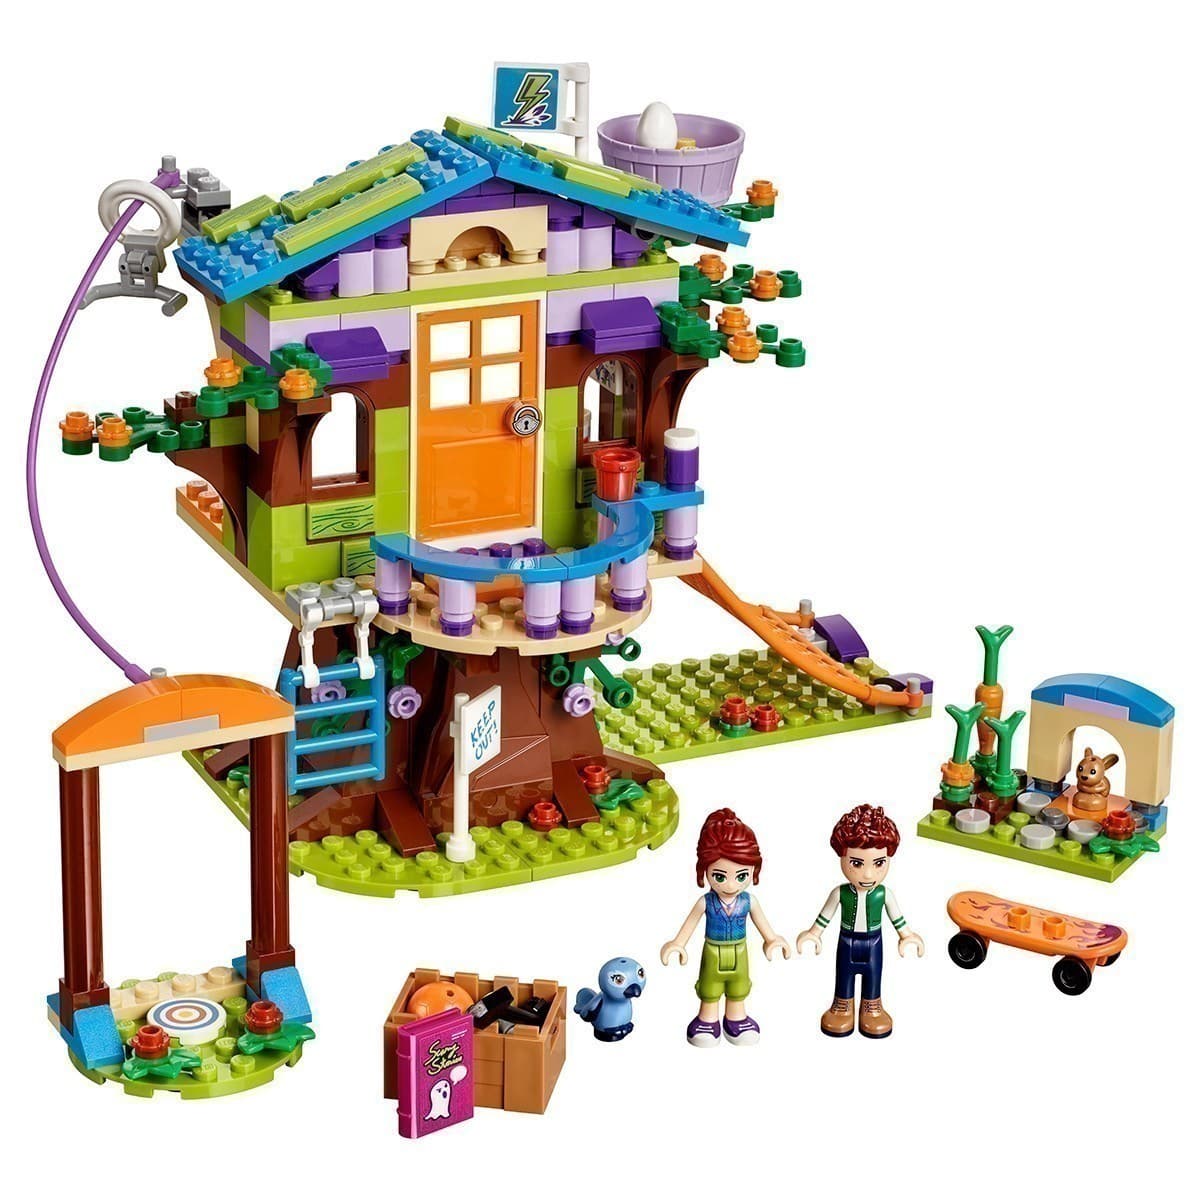 LEGO Friends 41335 - Mia's Tree House